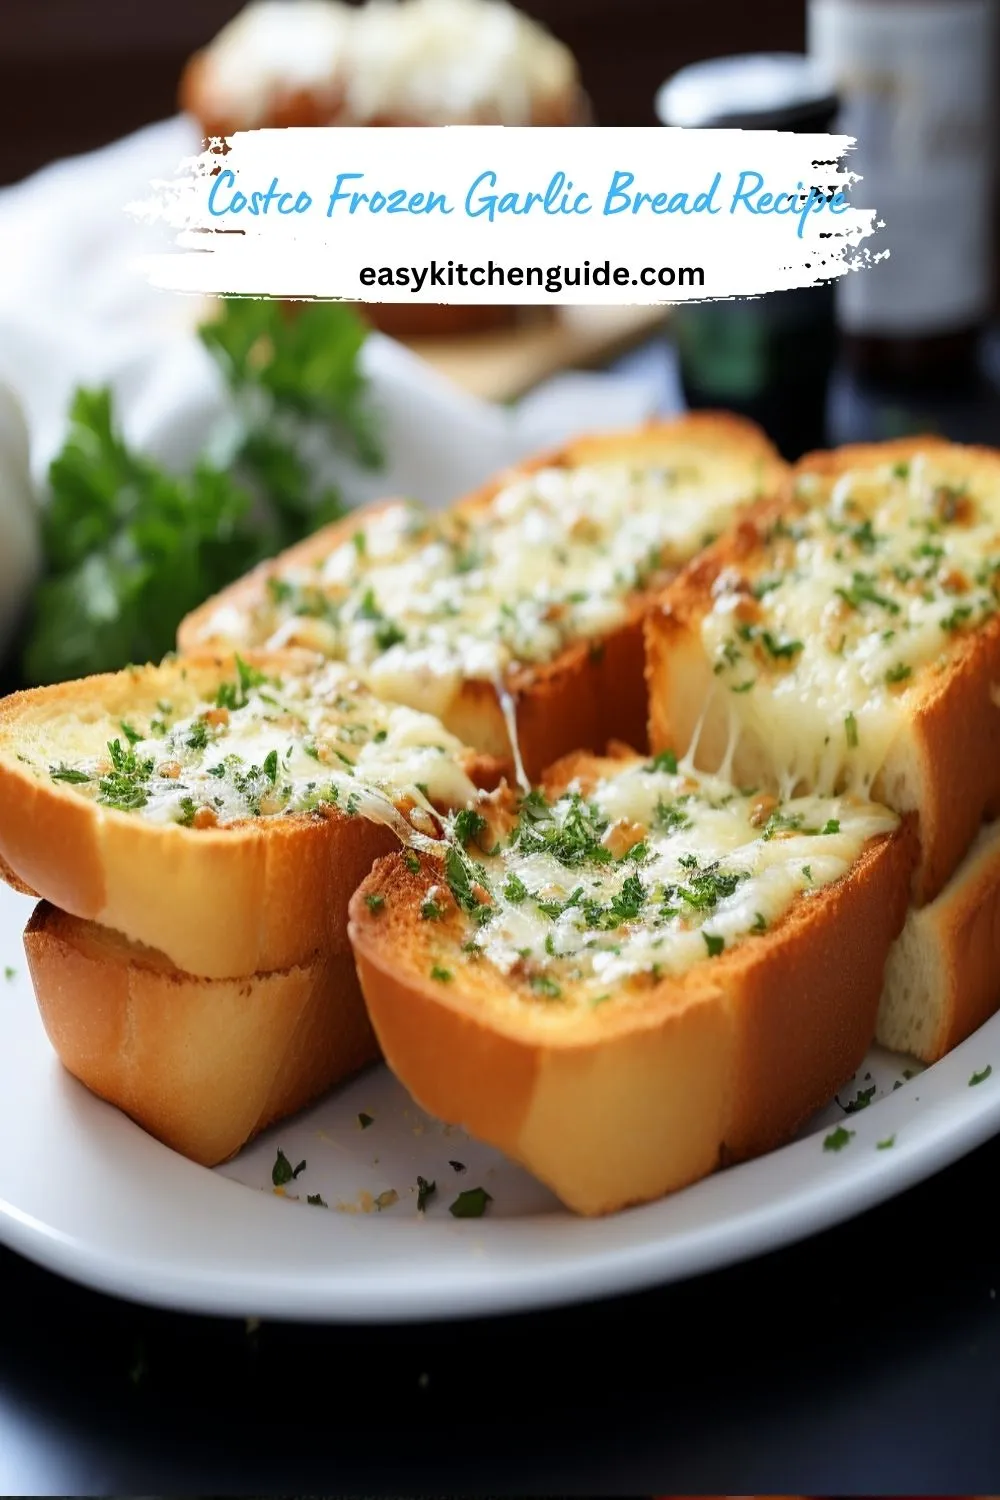 Costco Frozen Garlic Bread Recipe